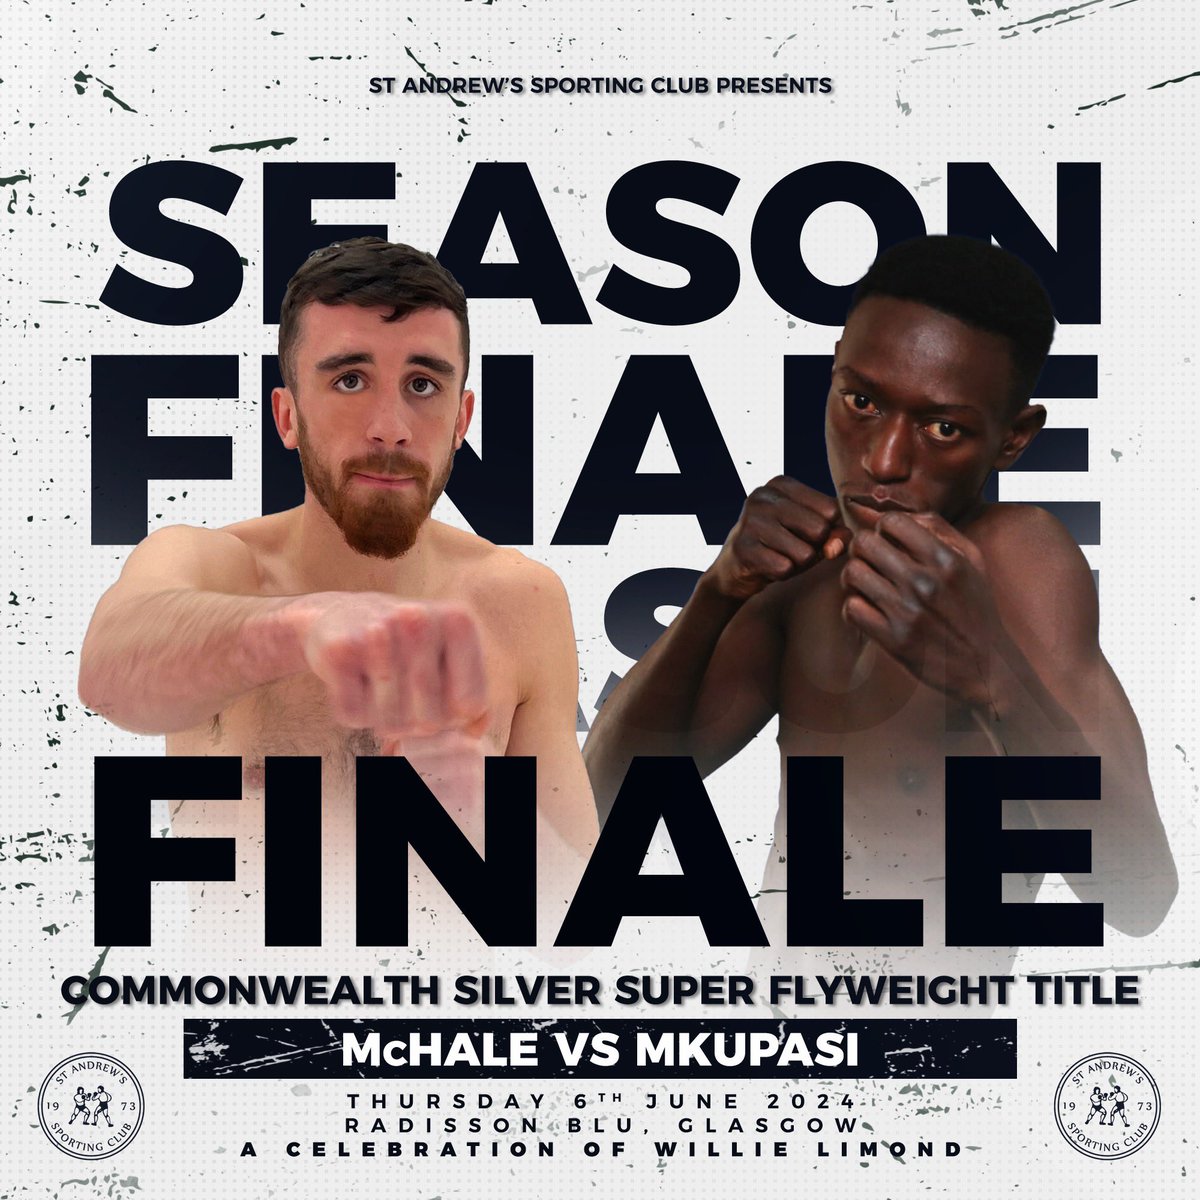 ⭐️ 𝑺𝑬𝑨𝑺𝑶𝑵 𝑭𝑰𝑵𝑨𝑳𝑬 ⭐️ 𝙏𝙝𝙪𝙧𝙨𝙙𝙖𝙮 6𝙩𝙝 𝙅𝙪𝙣𝙚 𝙍𝙖𝙙𝙞𝙨𝙨𝙤𝙣 𝘽𝙡𝙪, 𝙂𝙡𝙖𝙨𝙜𝙤𝙬 Our headliner for the night will be: 𝘾𝙤𝙢𝙢𝙤𝙣𝙬𝙚𝙖𝙡𝙩𝙝 𝙎𝙞𝙡𝙫𝙚𝙧 𝙎𝙪𝙥𝙚𝙧 𝙁𝙡𝙮𝙬𝙚𝙞𝙜𝙝𝙩 𝙩𝙞𝙩𝙡𝙚 👑 Matty McHale vs Mustafa K Mkupasi